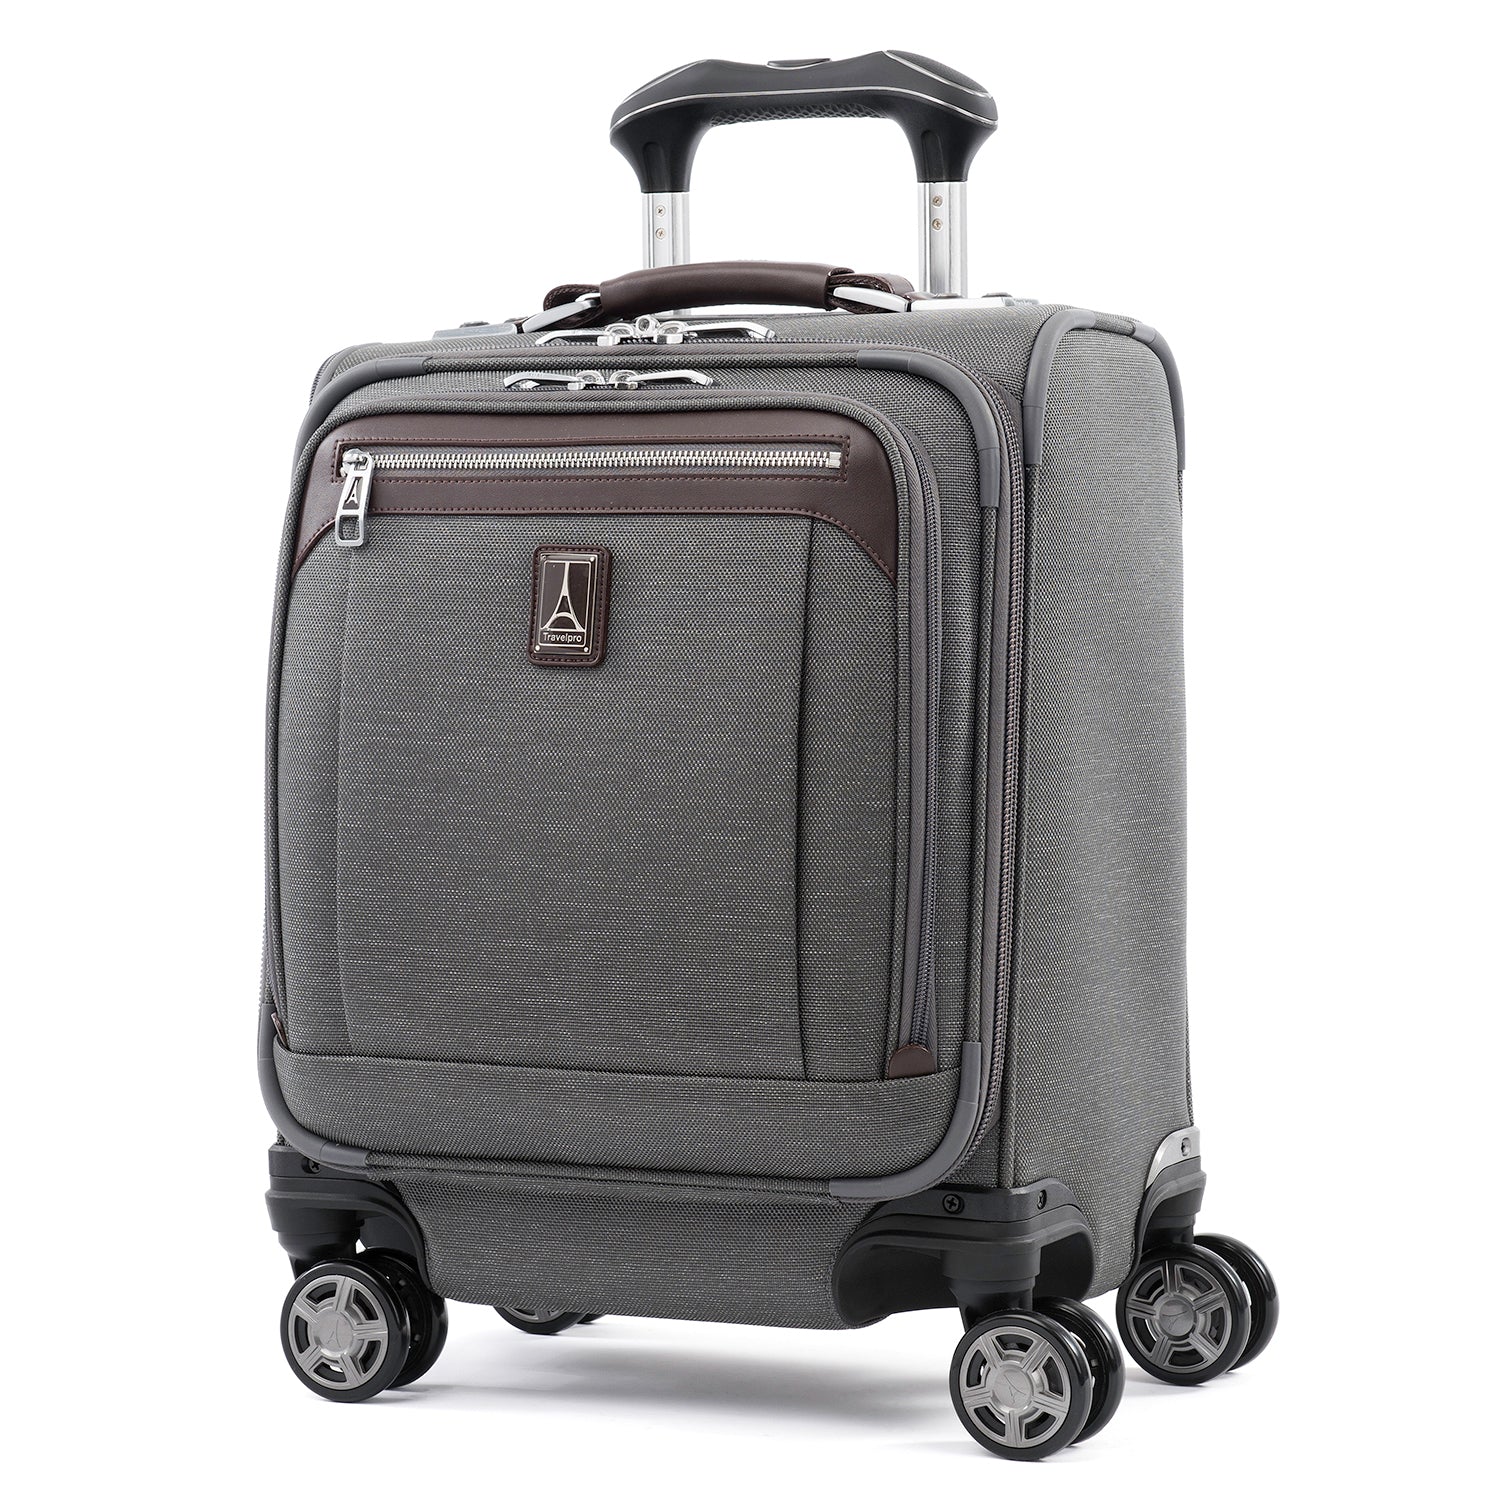 Travelpro Essentials Waist Bag